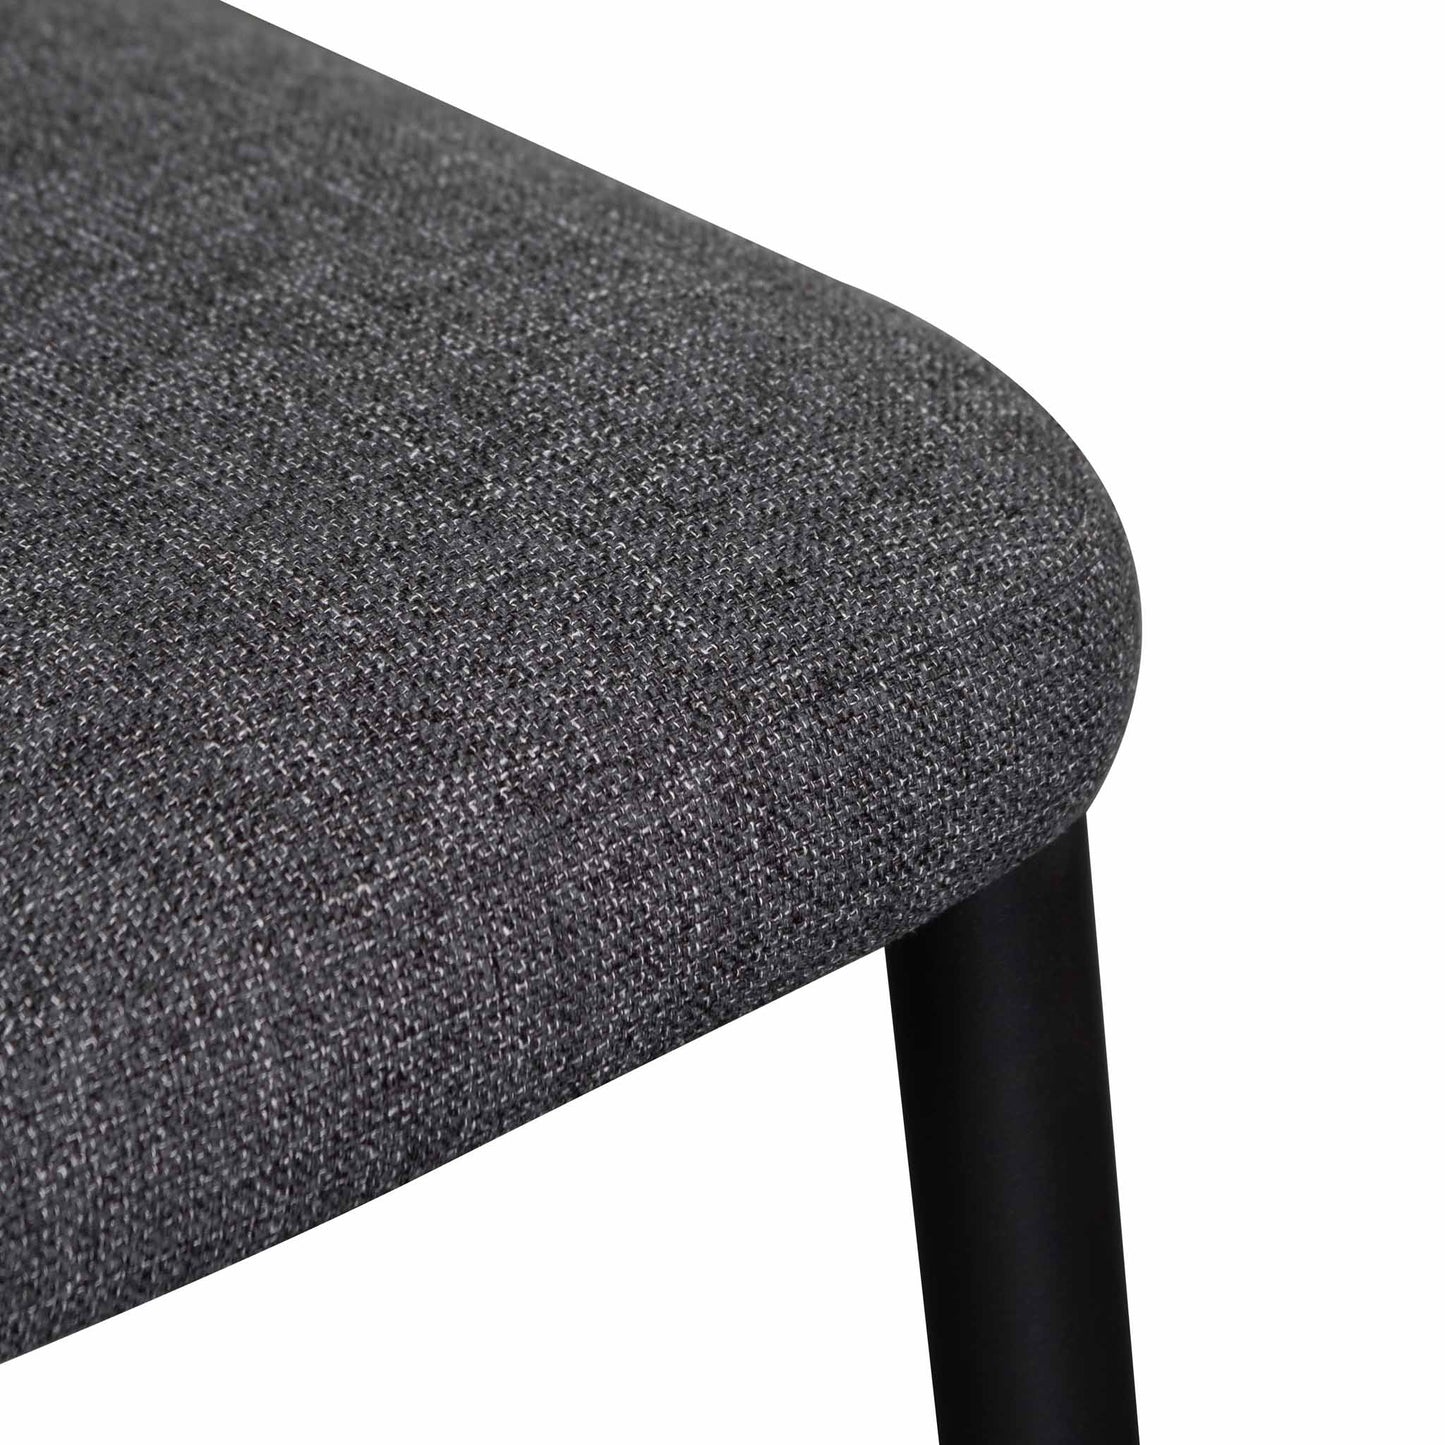 Innes | Modern Grey Fabric Dining Chairs | Set Of 4 | Dark Grey 